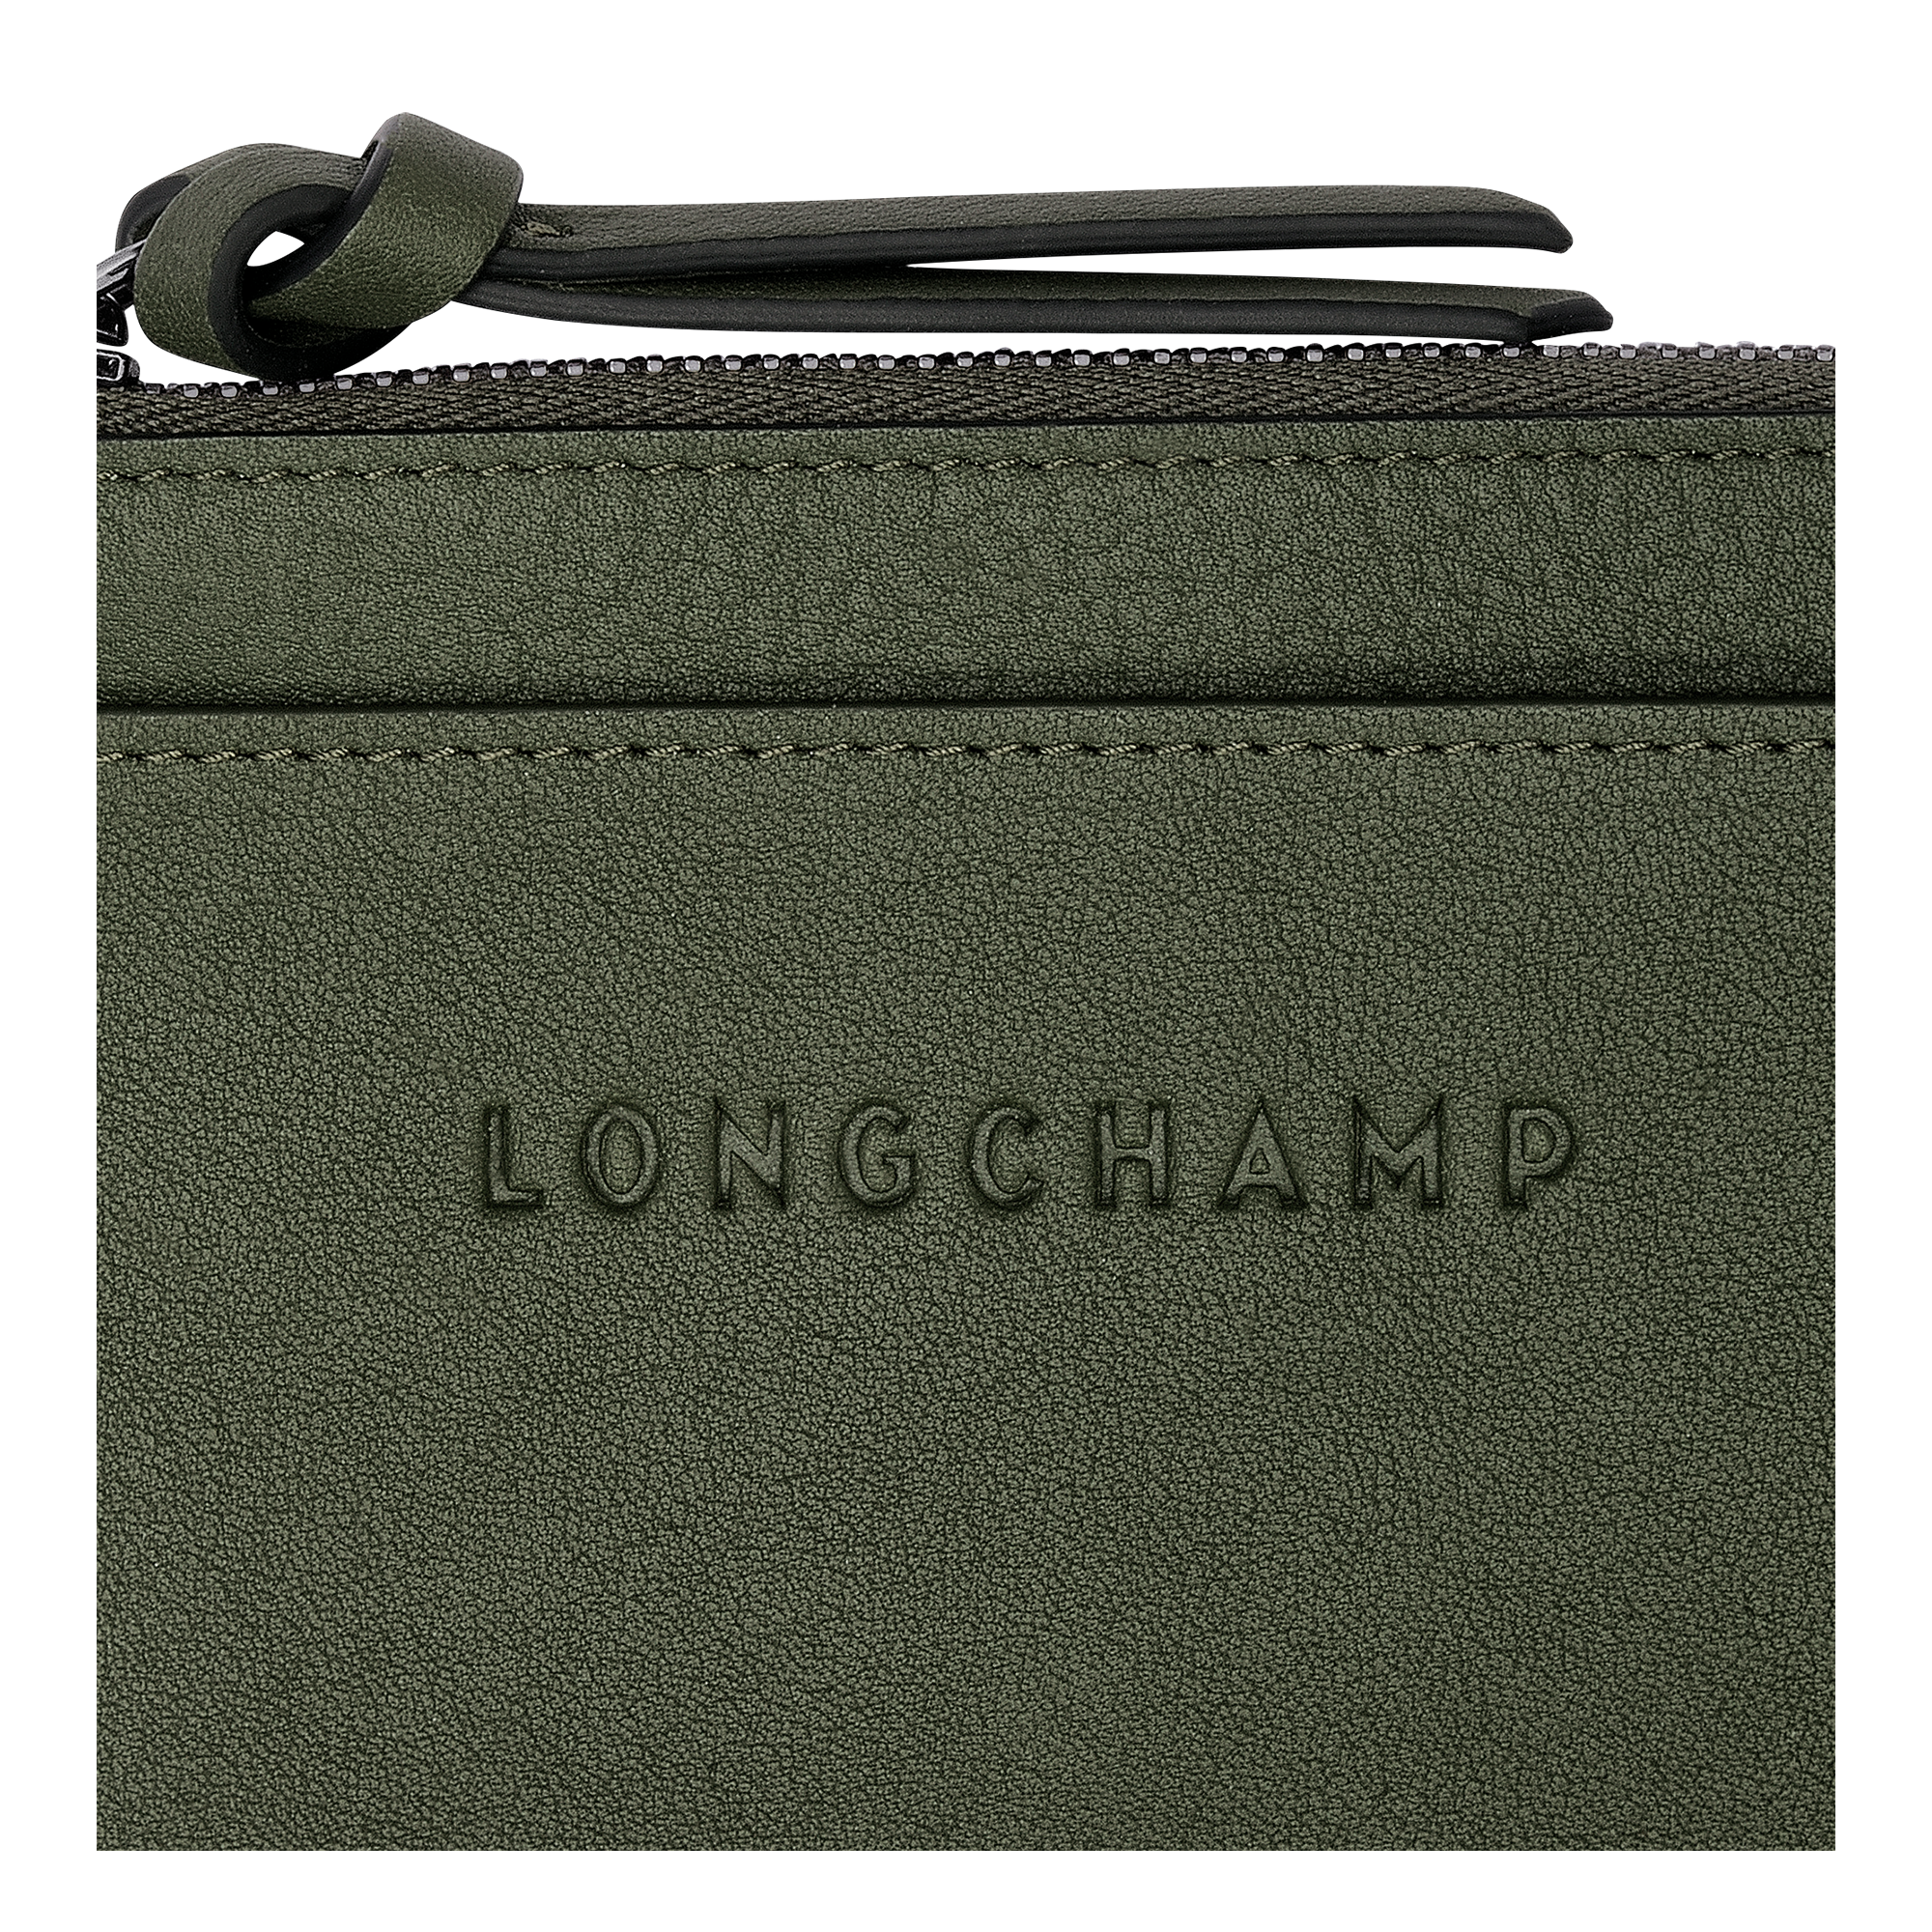 Longchamp 3D Card holder, Khaki